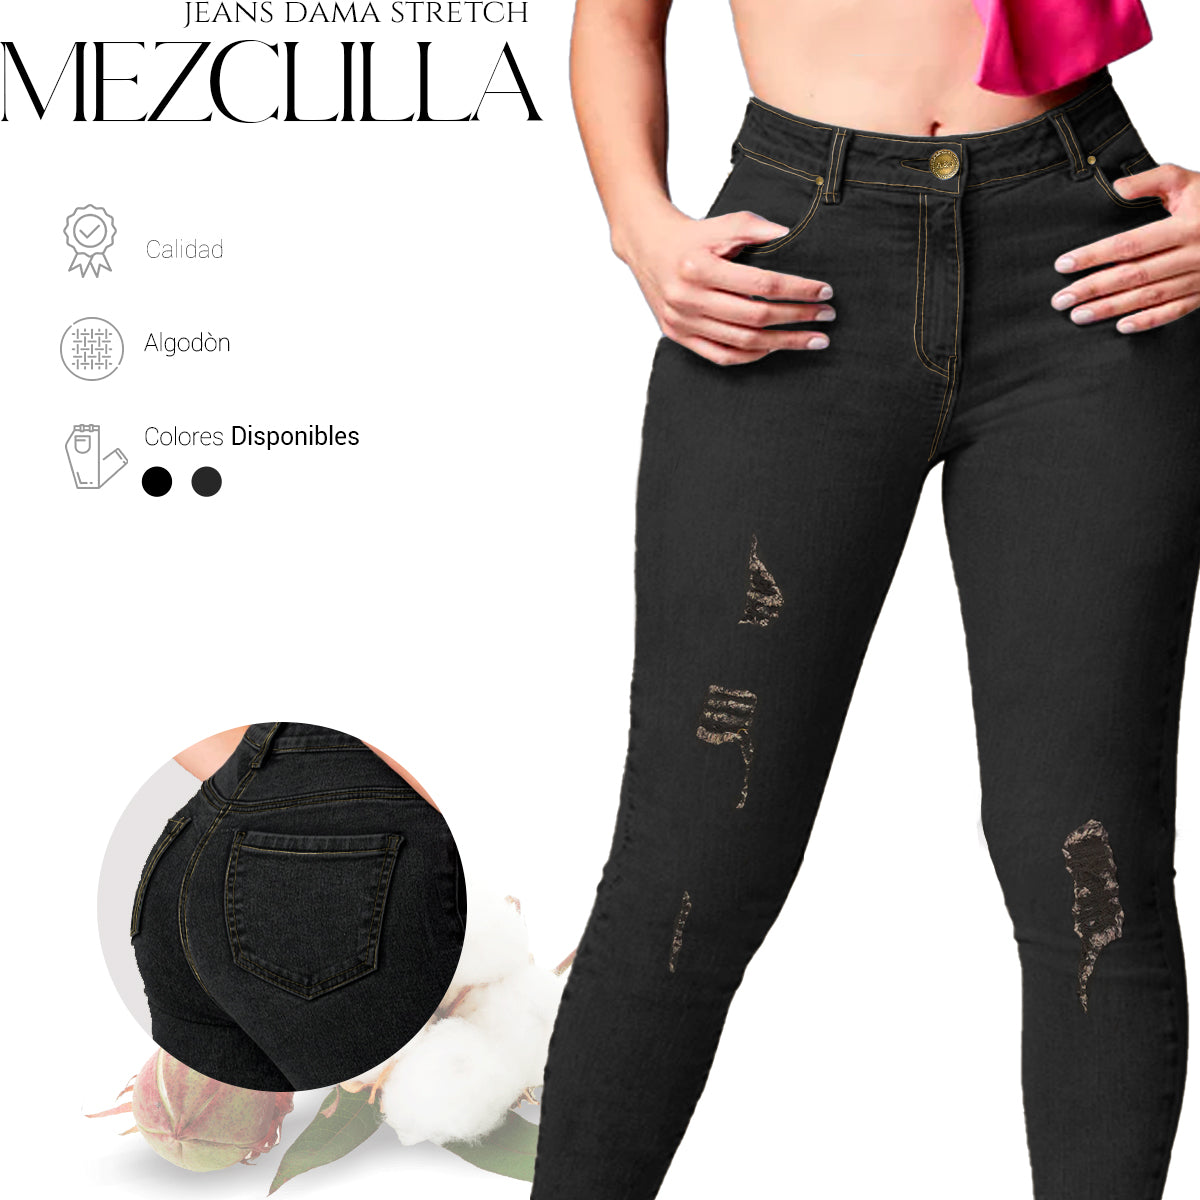 Jeans Dama Stretch Mezclilla Levanta Pompa Tiro Colombiano Vendy Jeans –  Shendy Vendy